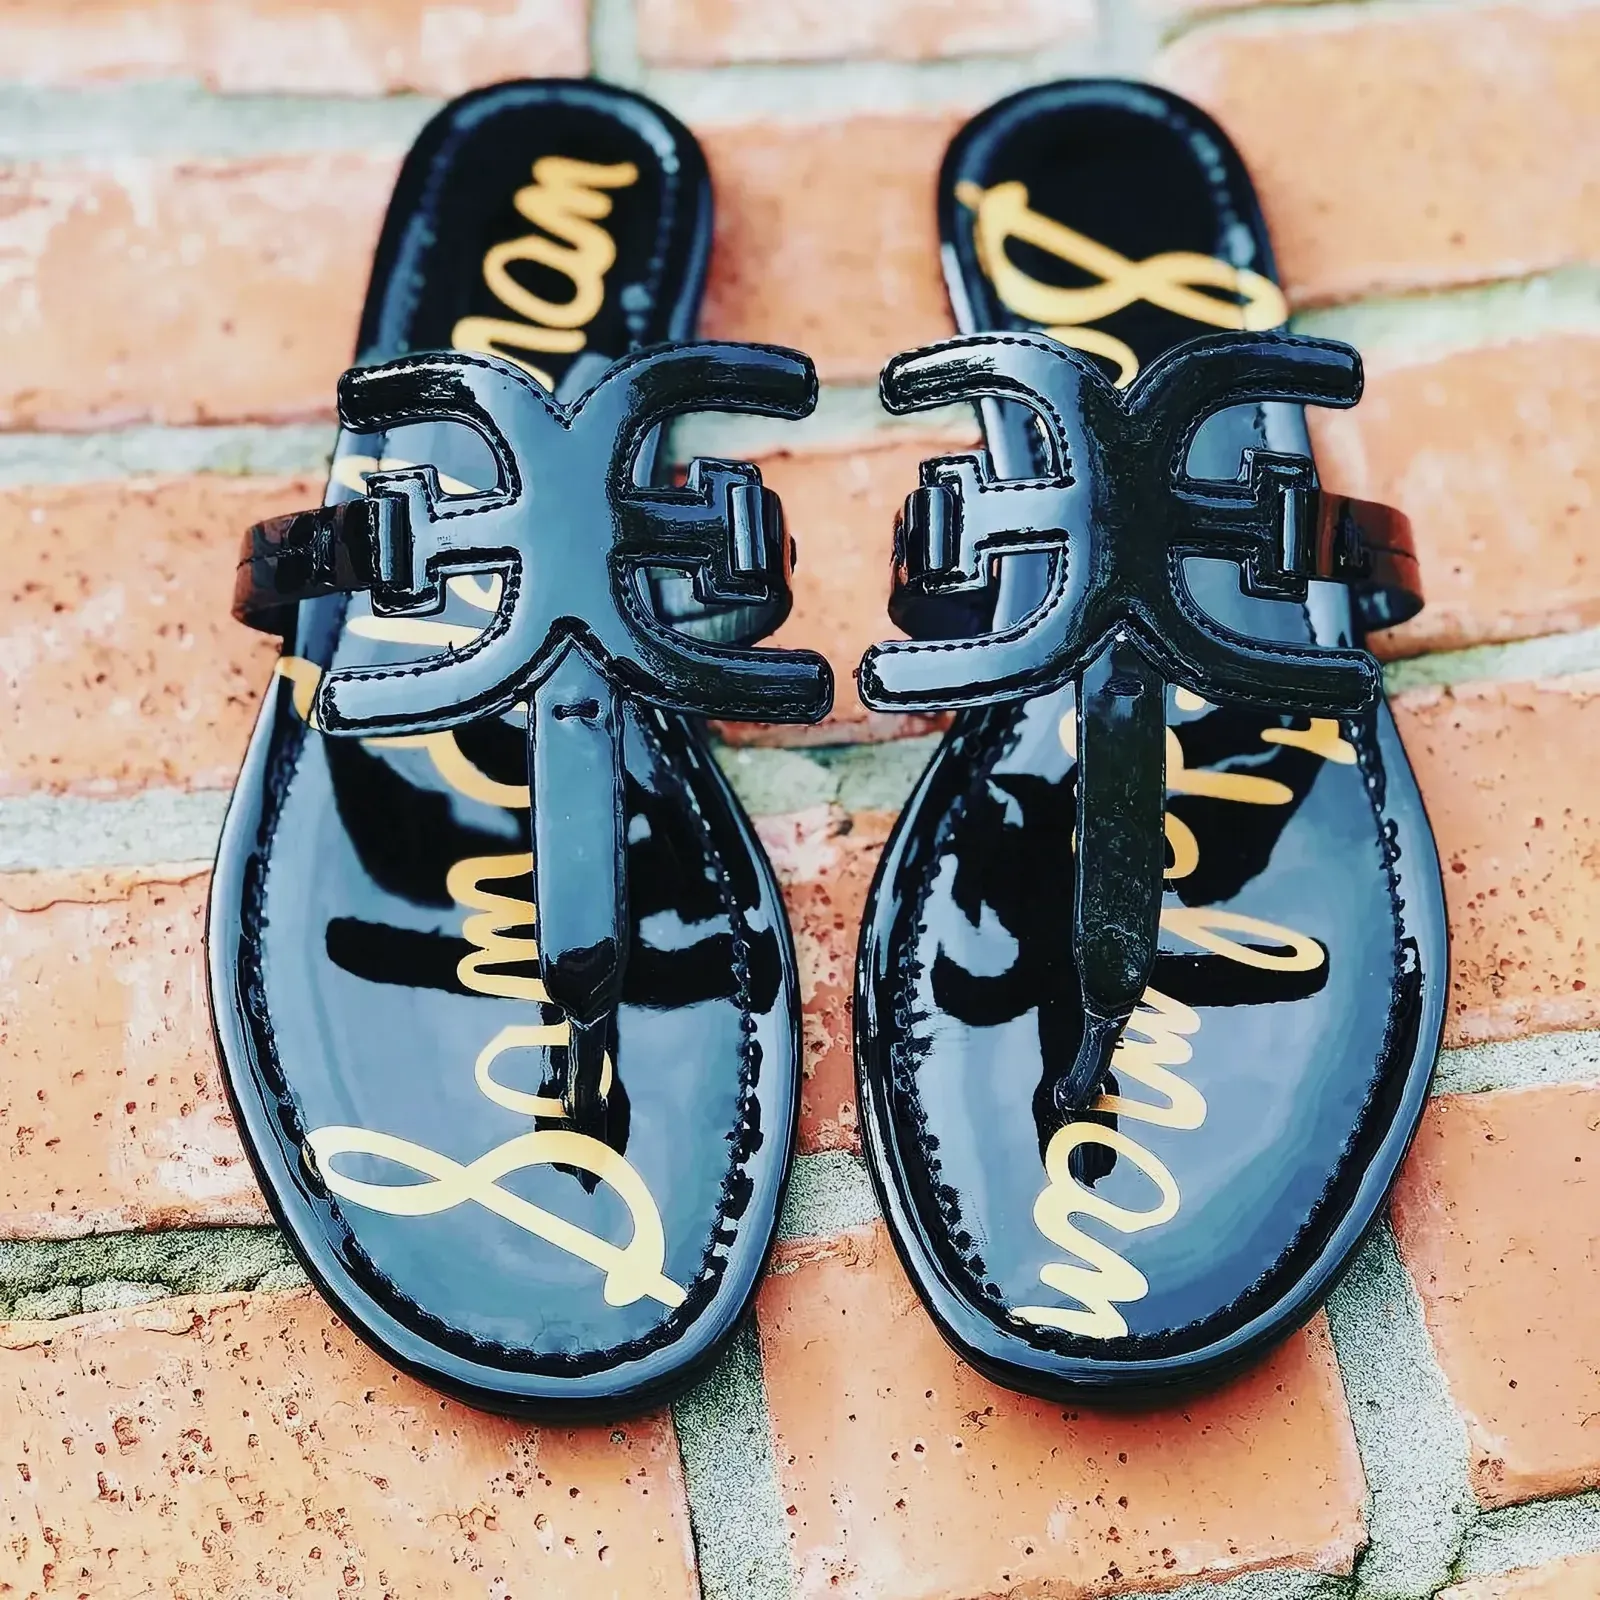 Stylish Sam Edelman black sandals with gold logo on a brick surface